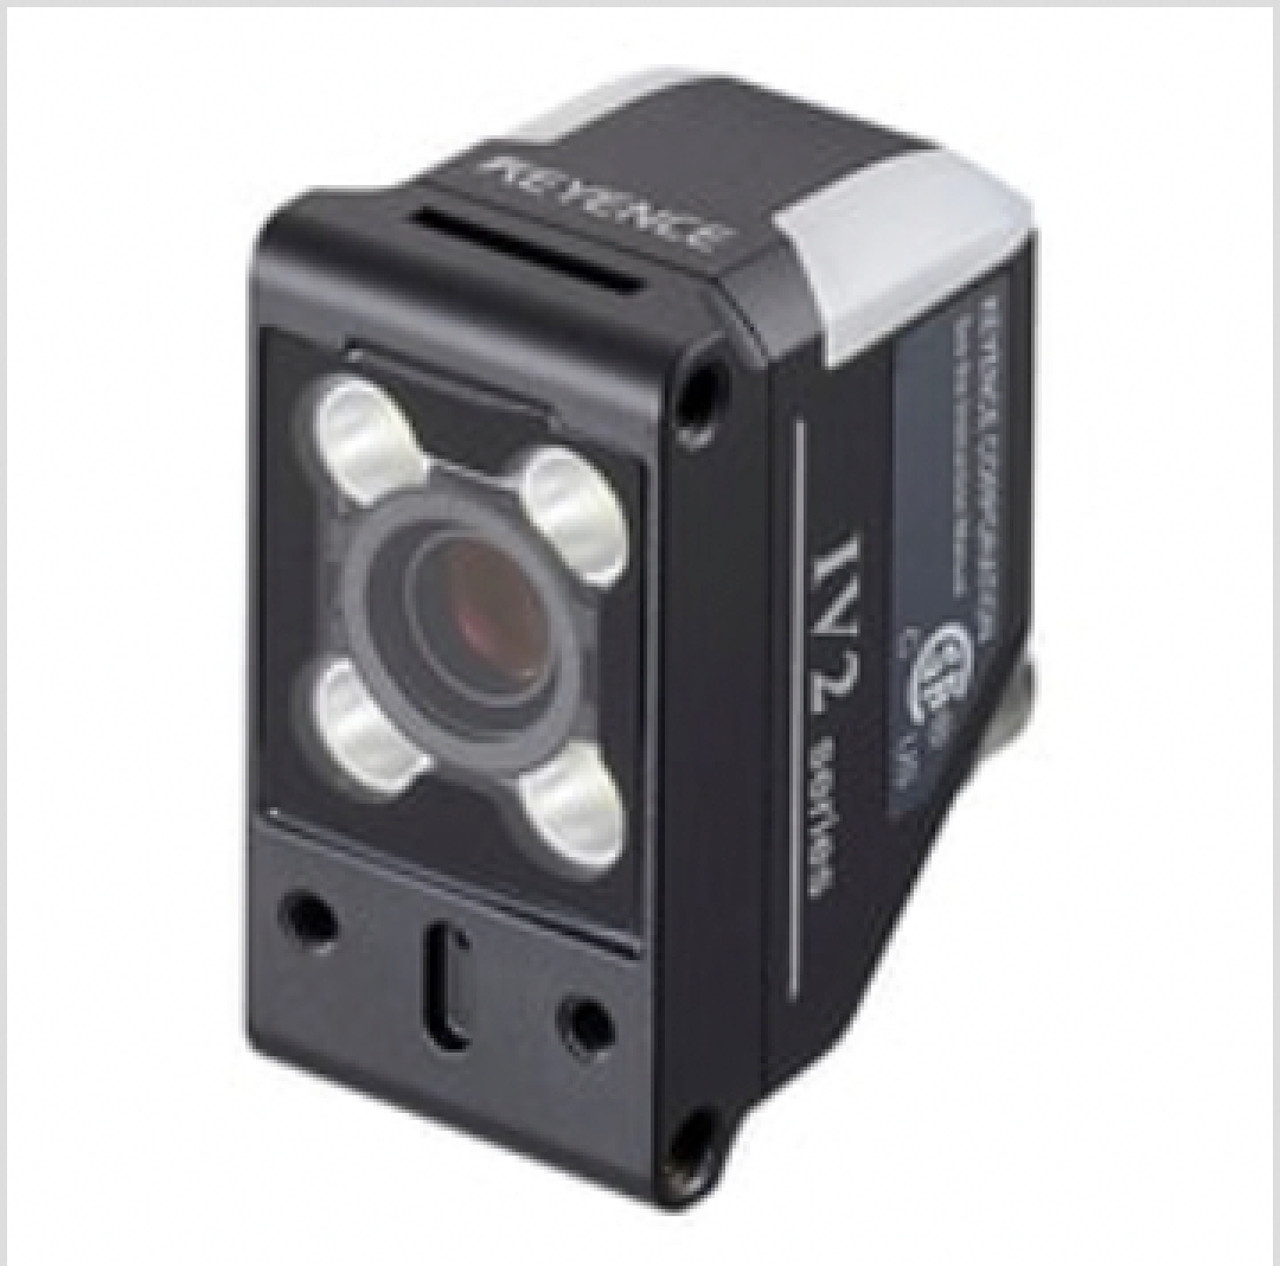 Keyence IV-G600MA Vision Sensor Head, Wide field of View, Monochrome, Auto Focus [New]